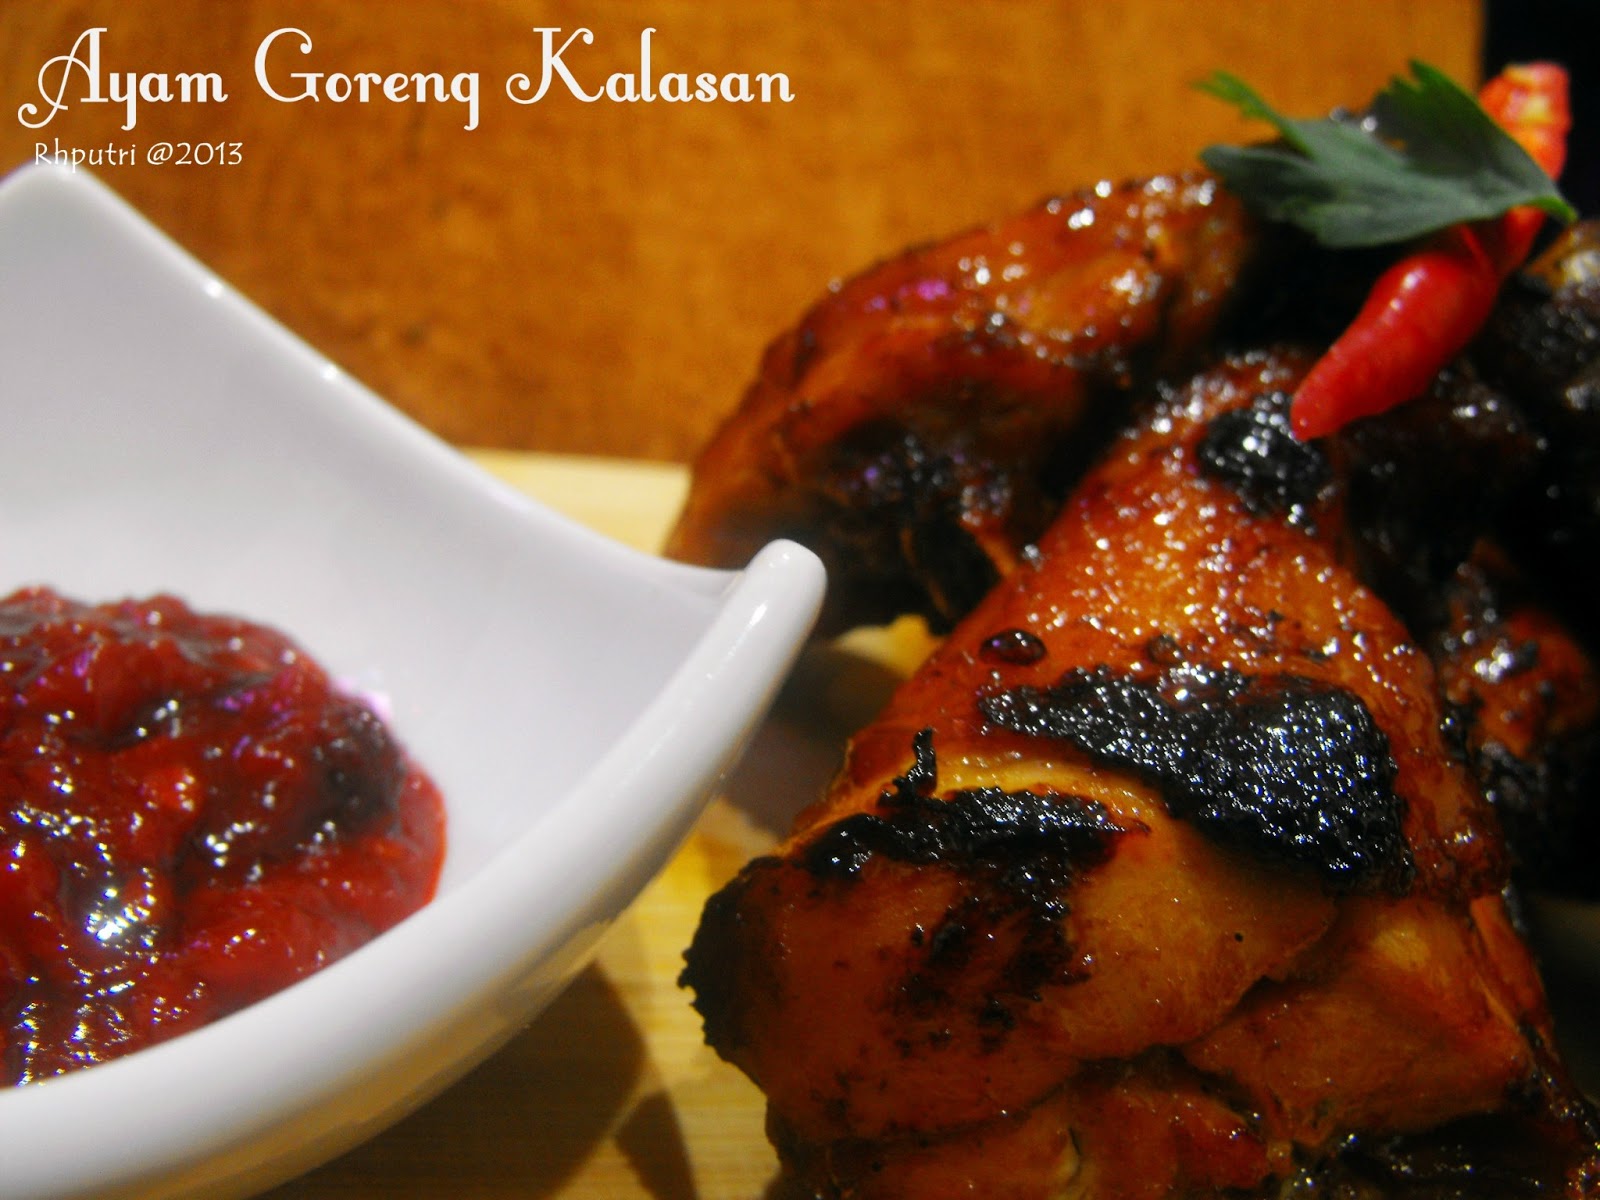 Behind the kitchen: Ayam Goreng Kalasan